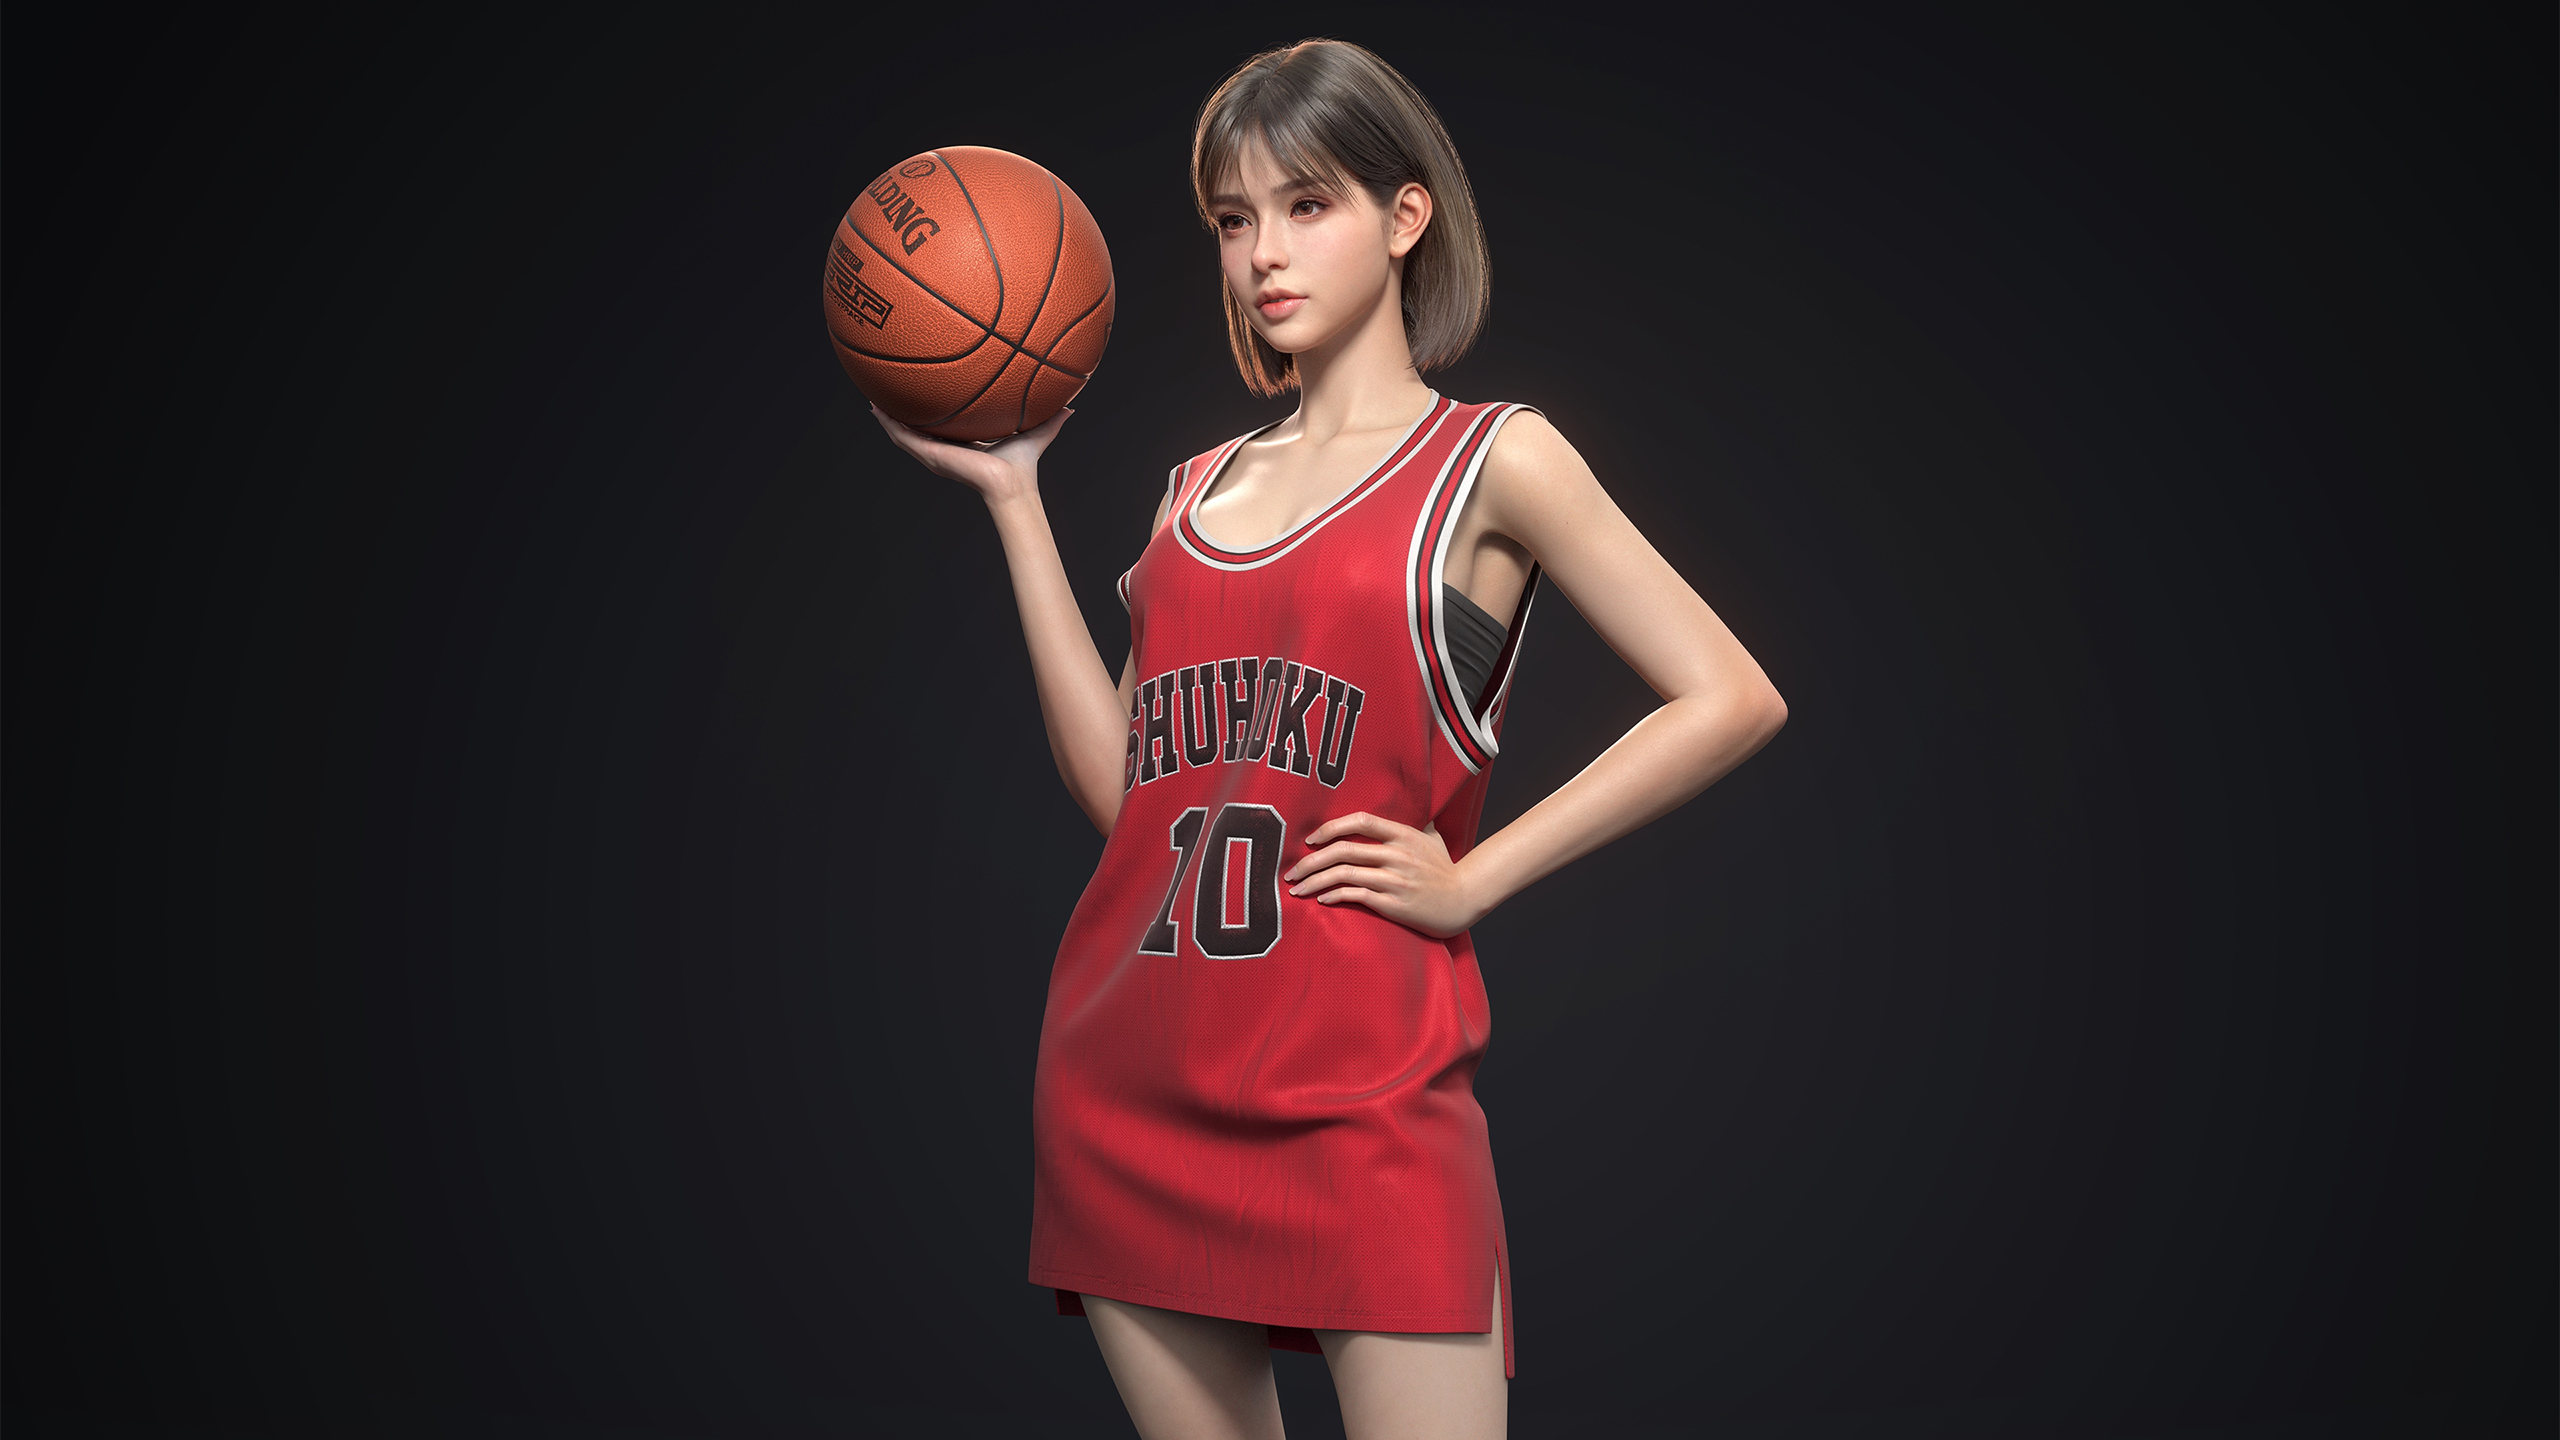 Slam Dunk Simple Background Basketball Sportswear Red Clothing Short Hair Euginnx Wu CGi Asian Women 2560x1440